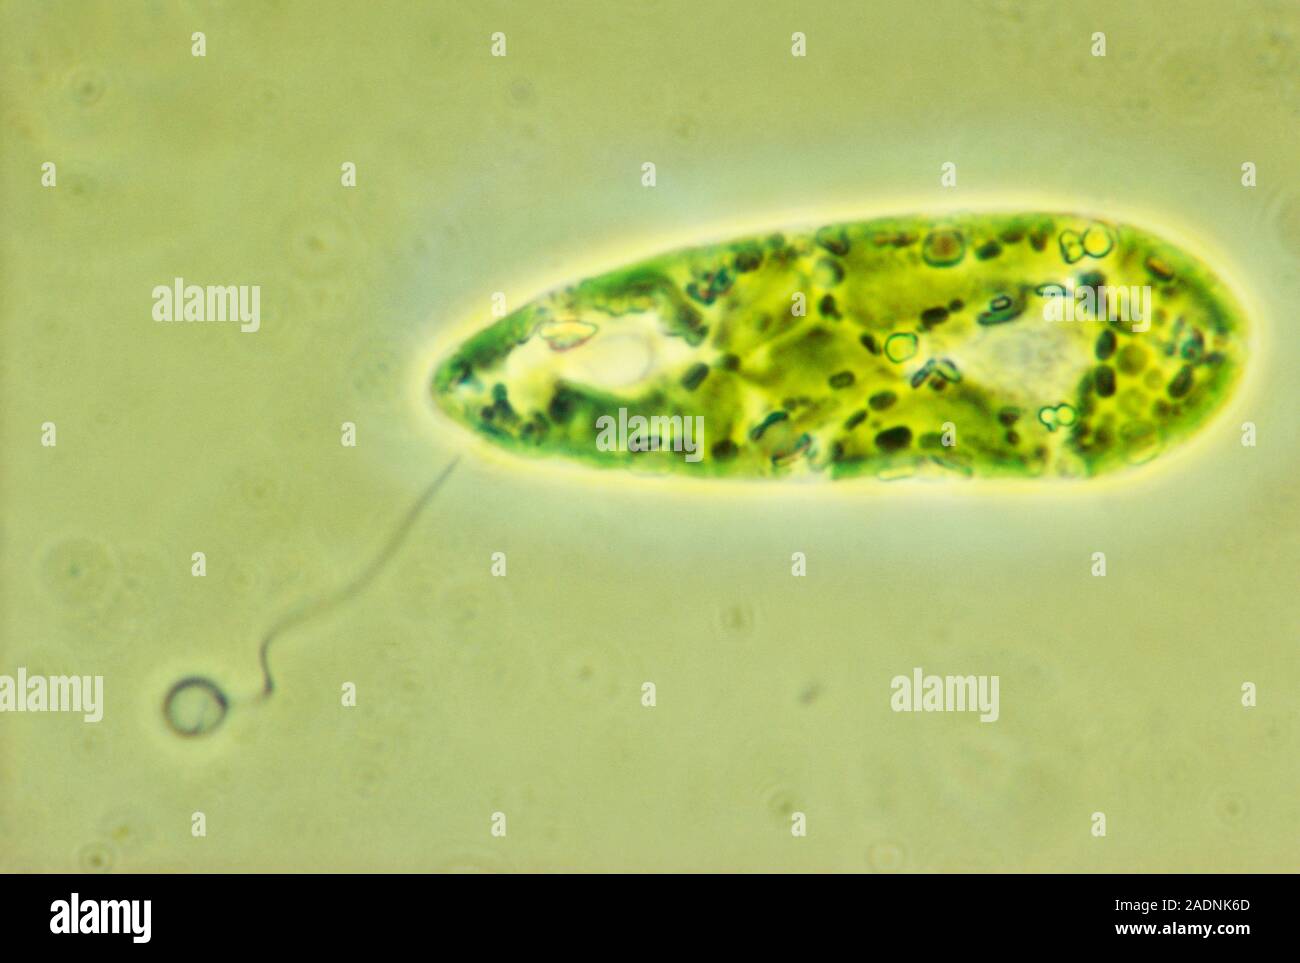 Euglena flagellate protozoan. Light micrograph of the flagellate protozoan Euglena viridis. This freshwater single-celled organism can either obtain e Stock Photo